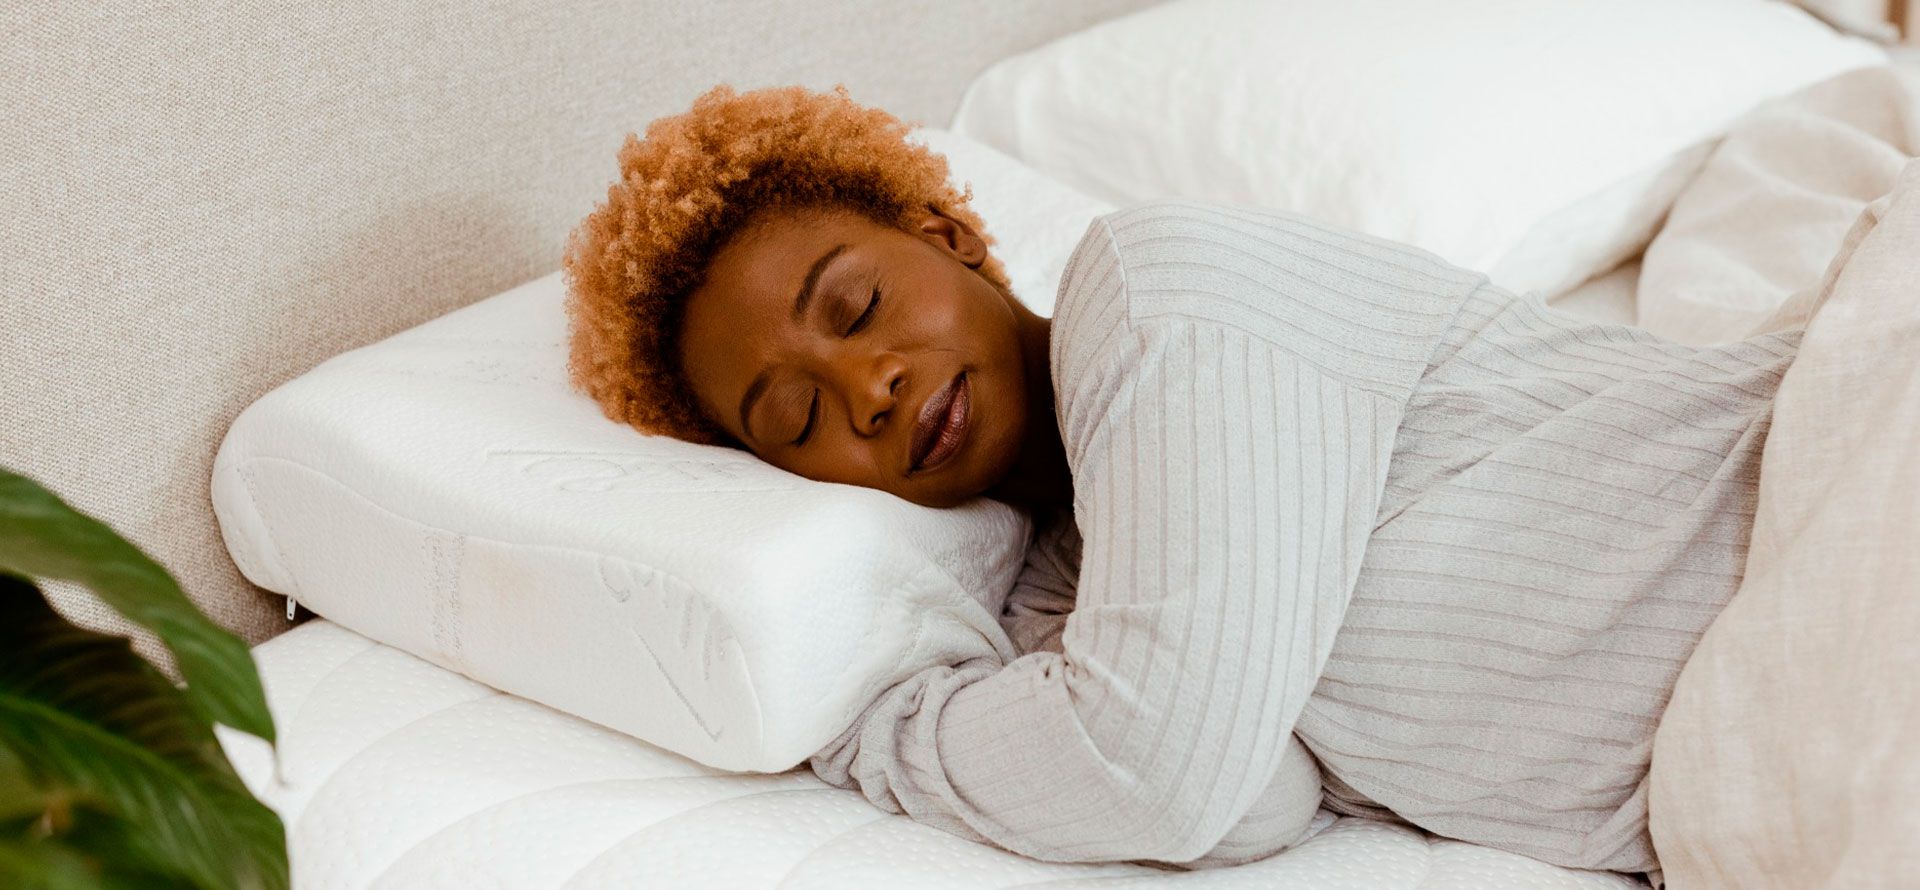 A woman sleeps on a latex pillow.